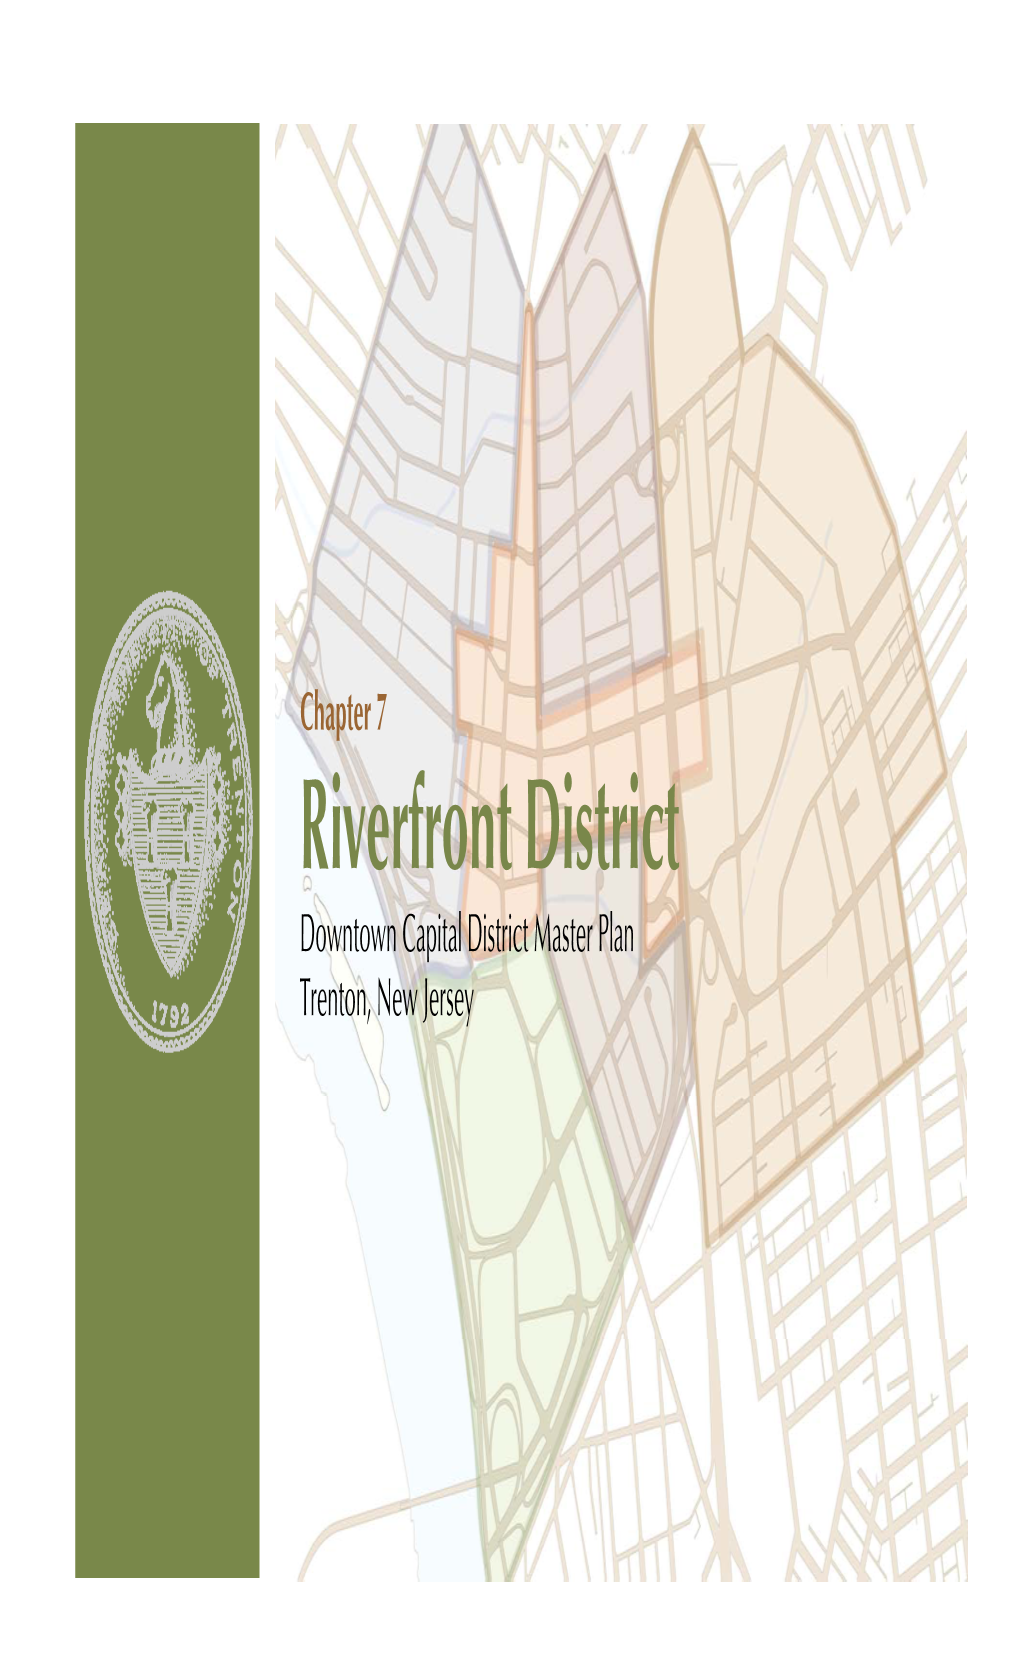 Riverfront District Downtown Capital District Master Plan Trenton, New Jersey